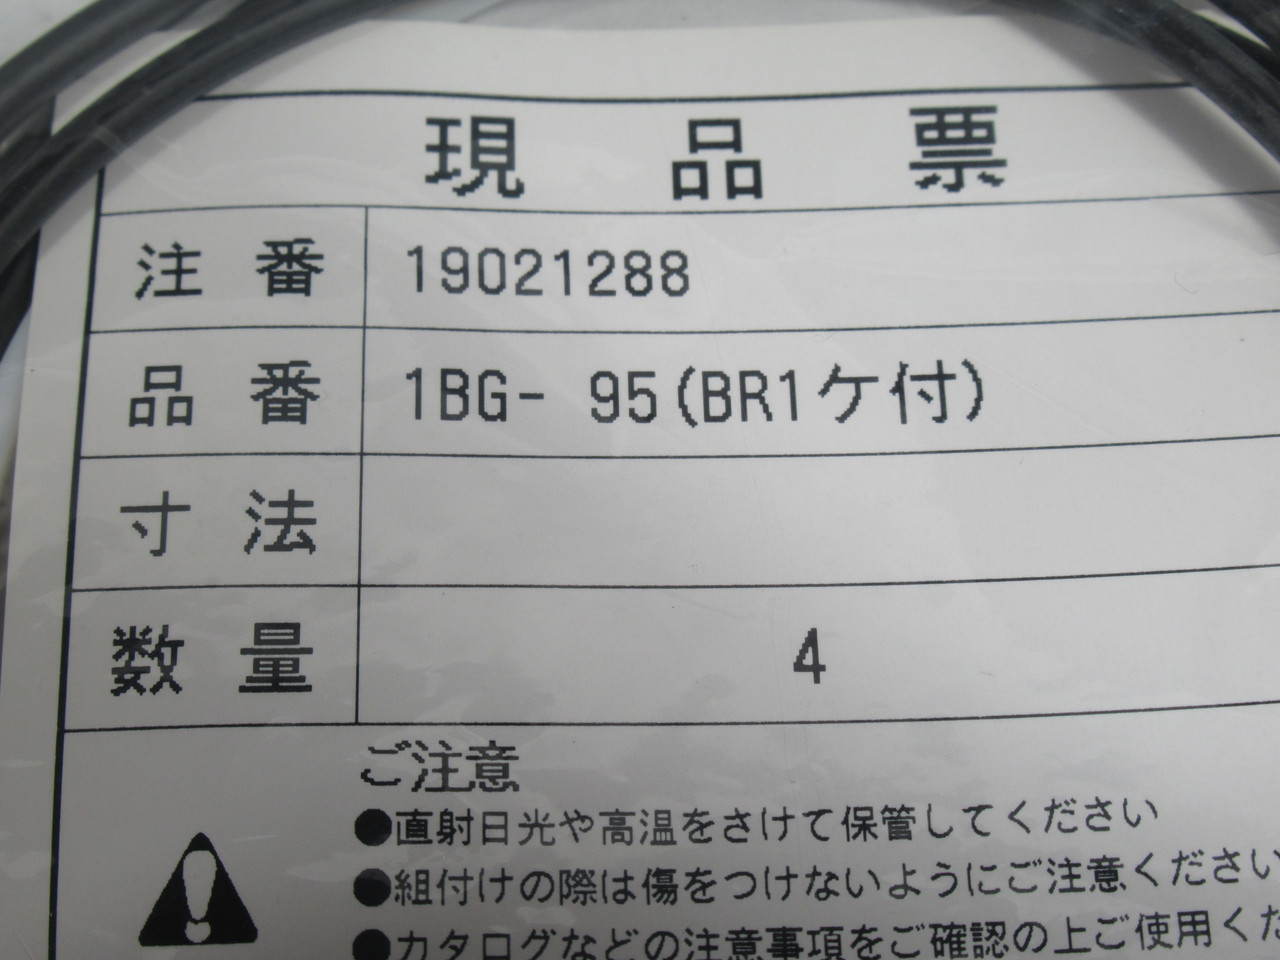 Generic 1BG-95 O-Ring 95mm ID *4-Pack* NWB